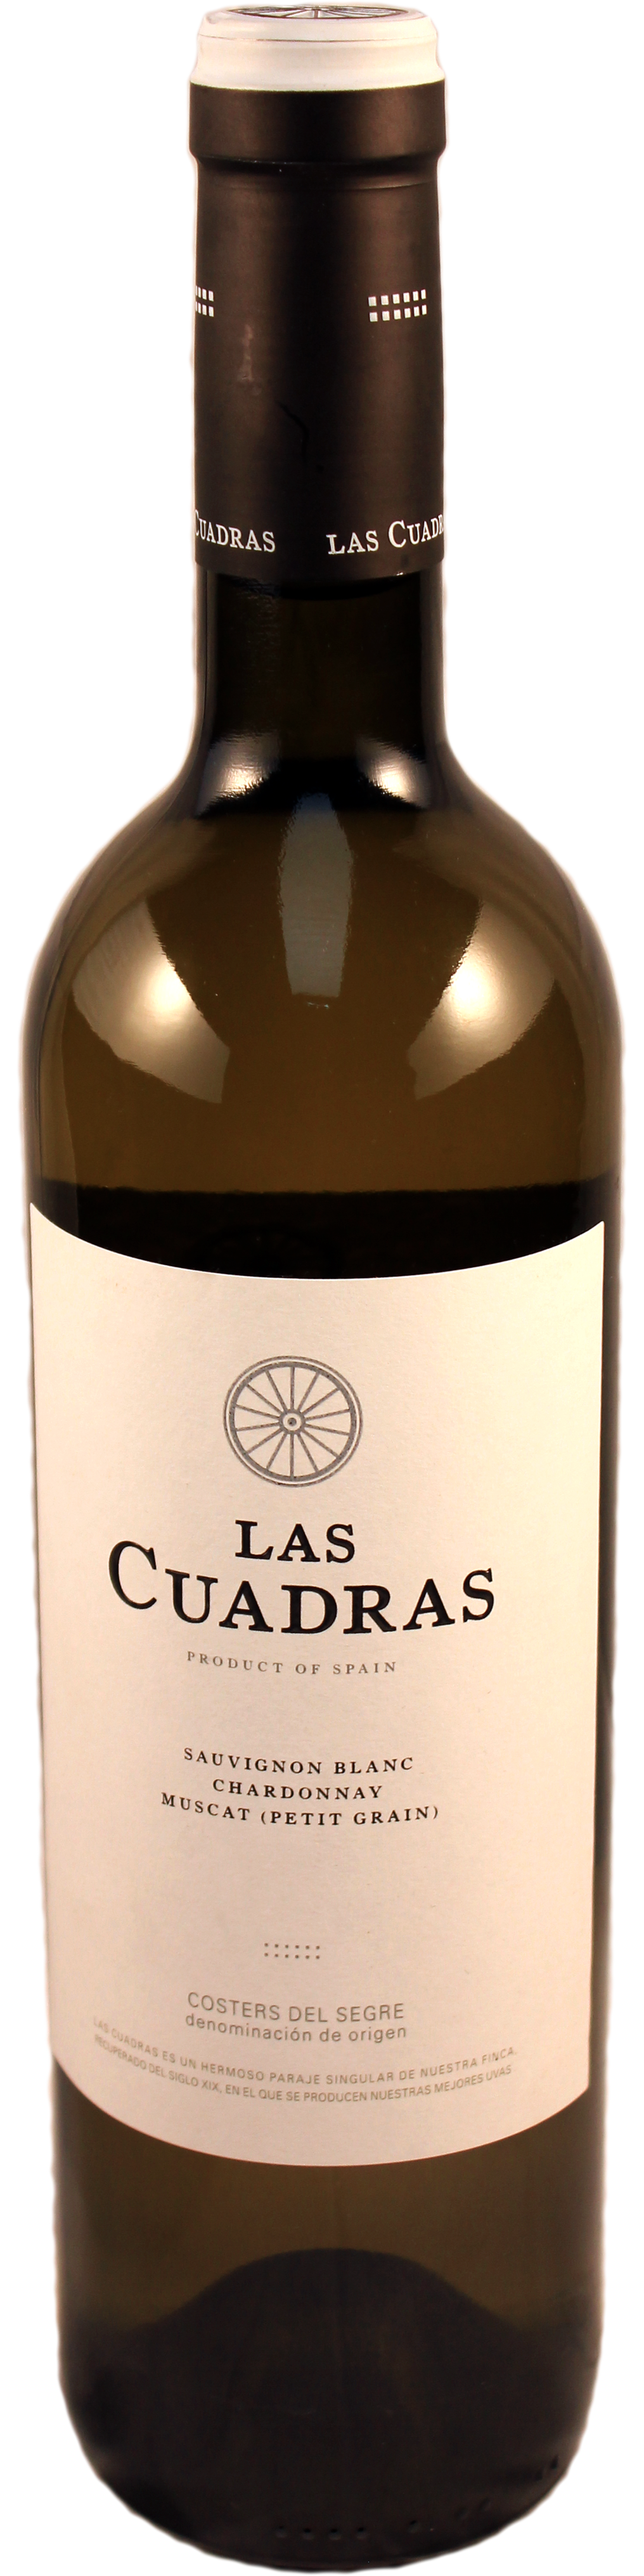 Bottle shot of 2012 Las Cuadras Blanco